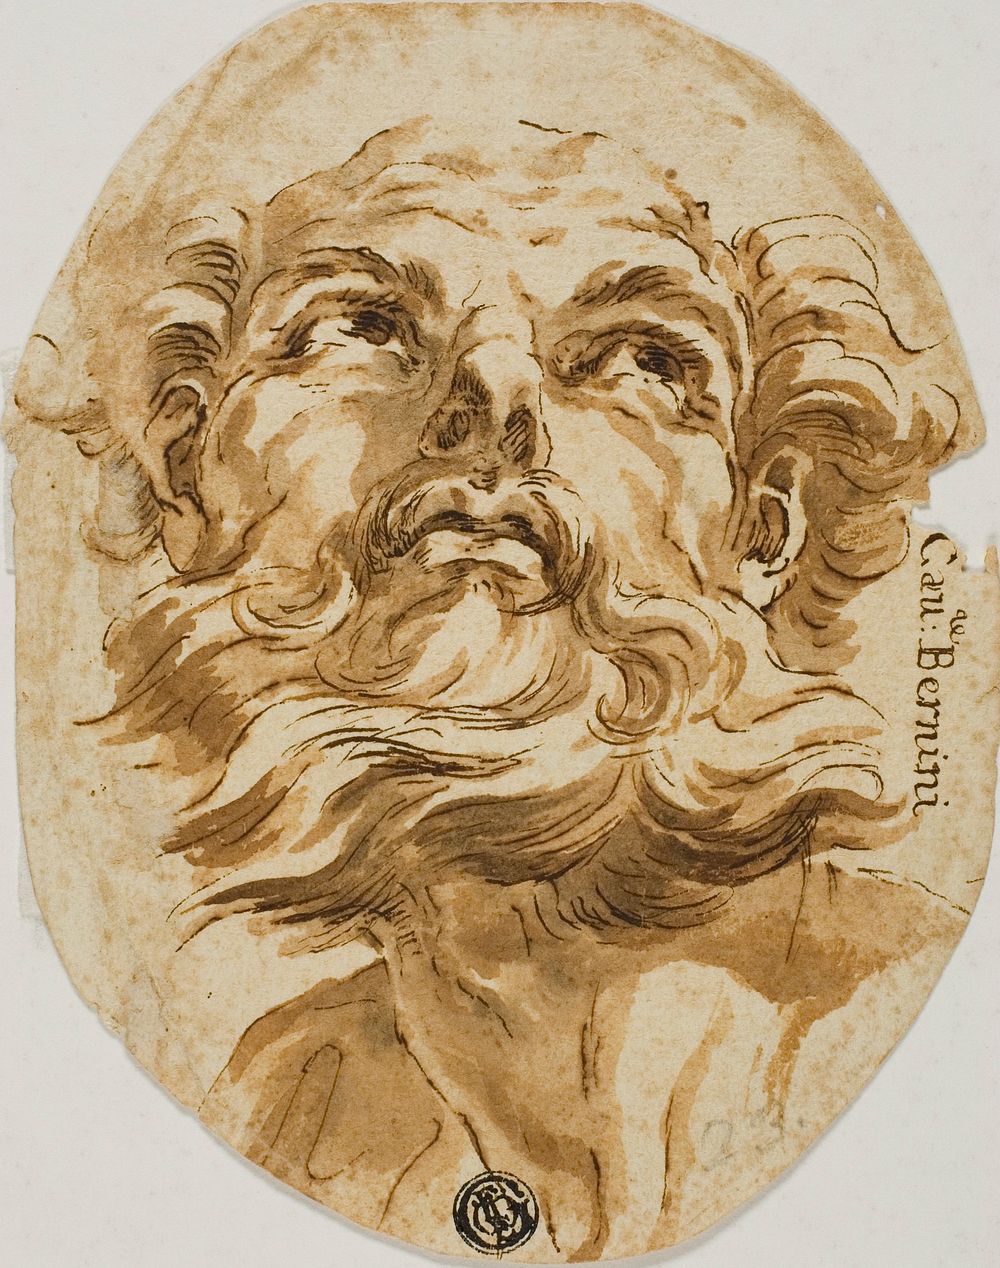 Bearded Head by Circle of Domenichino